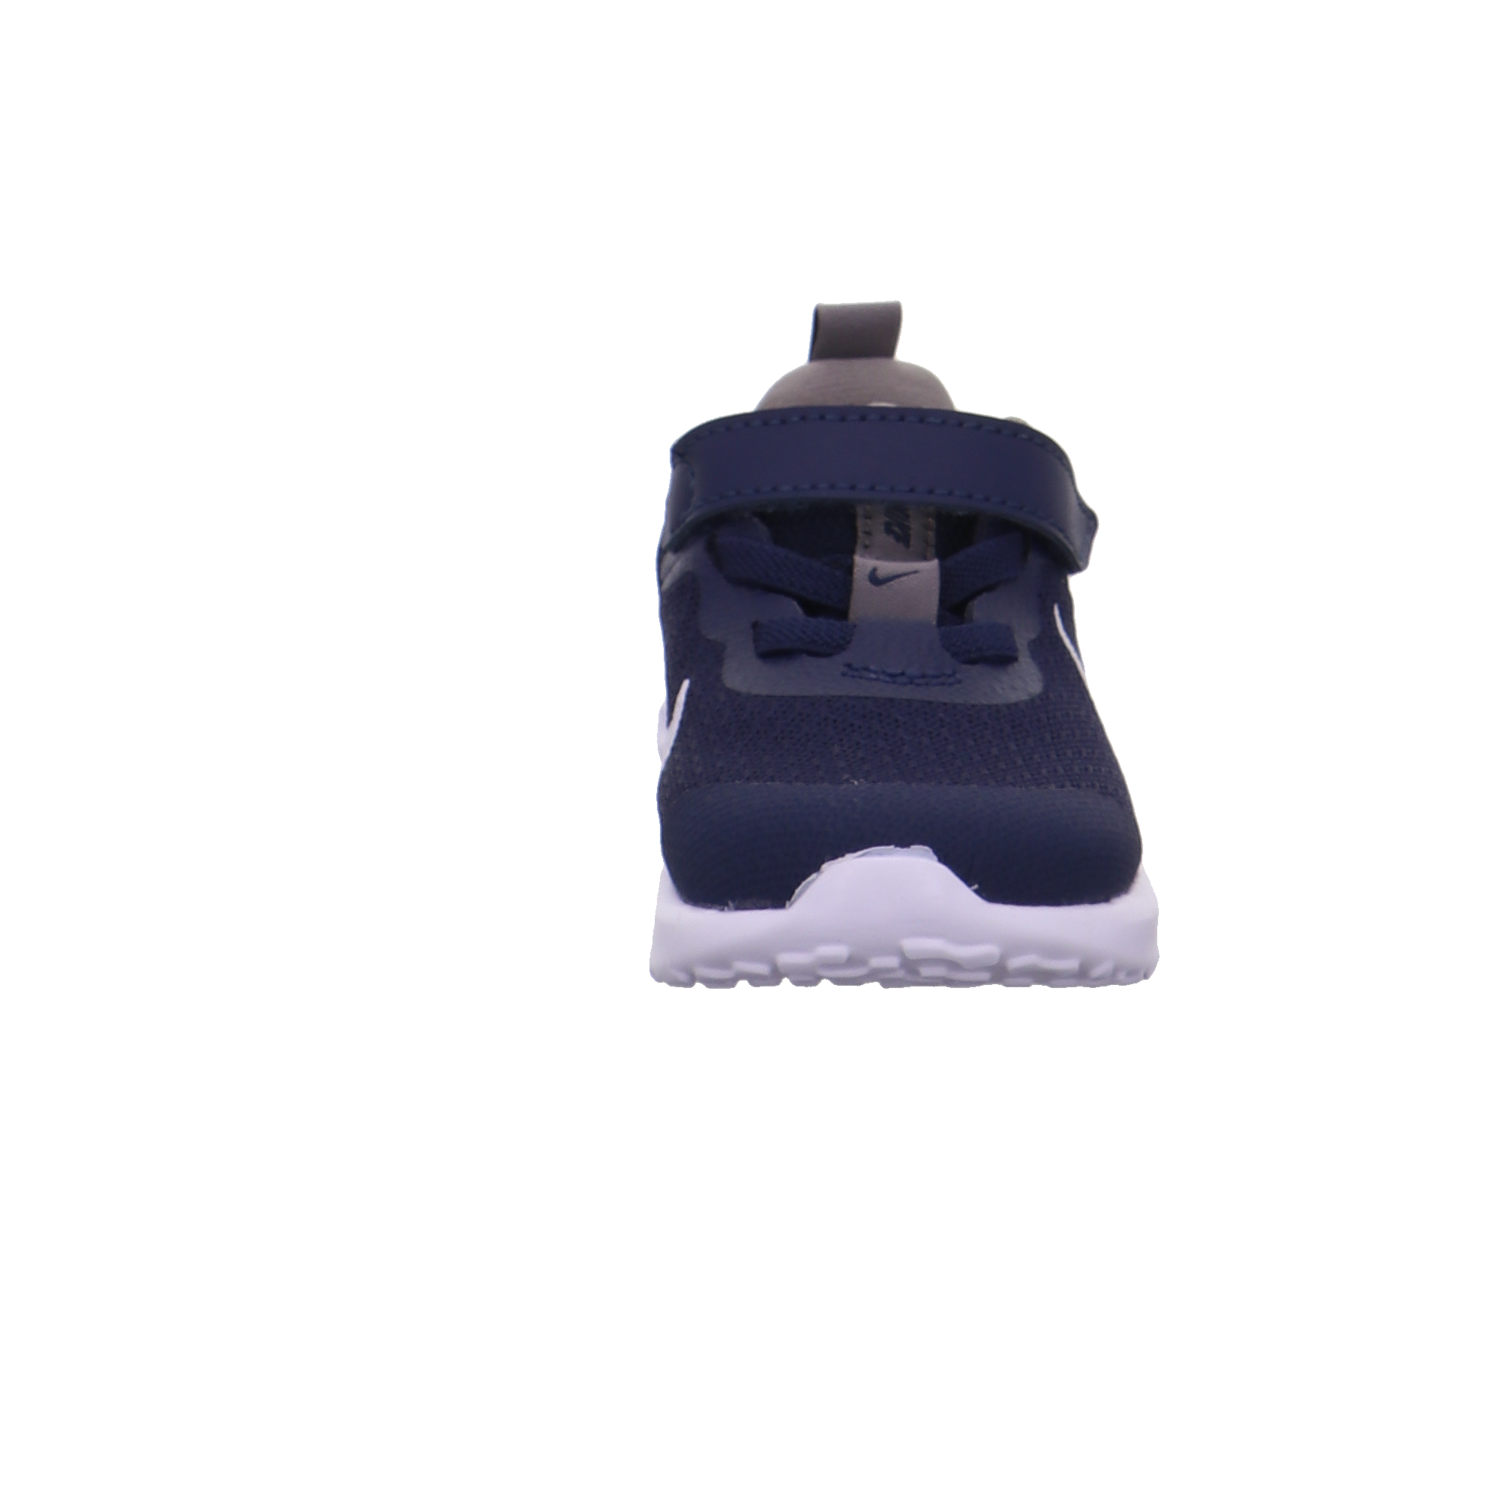 Nike Krabbel- und Lauflernschuhe blau kombi Bild3